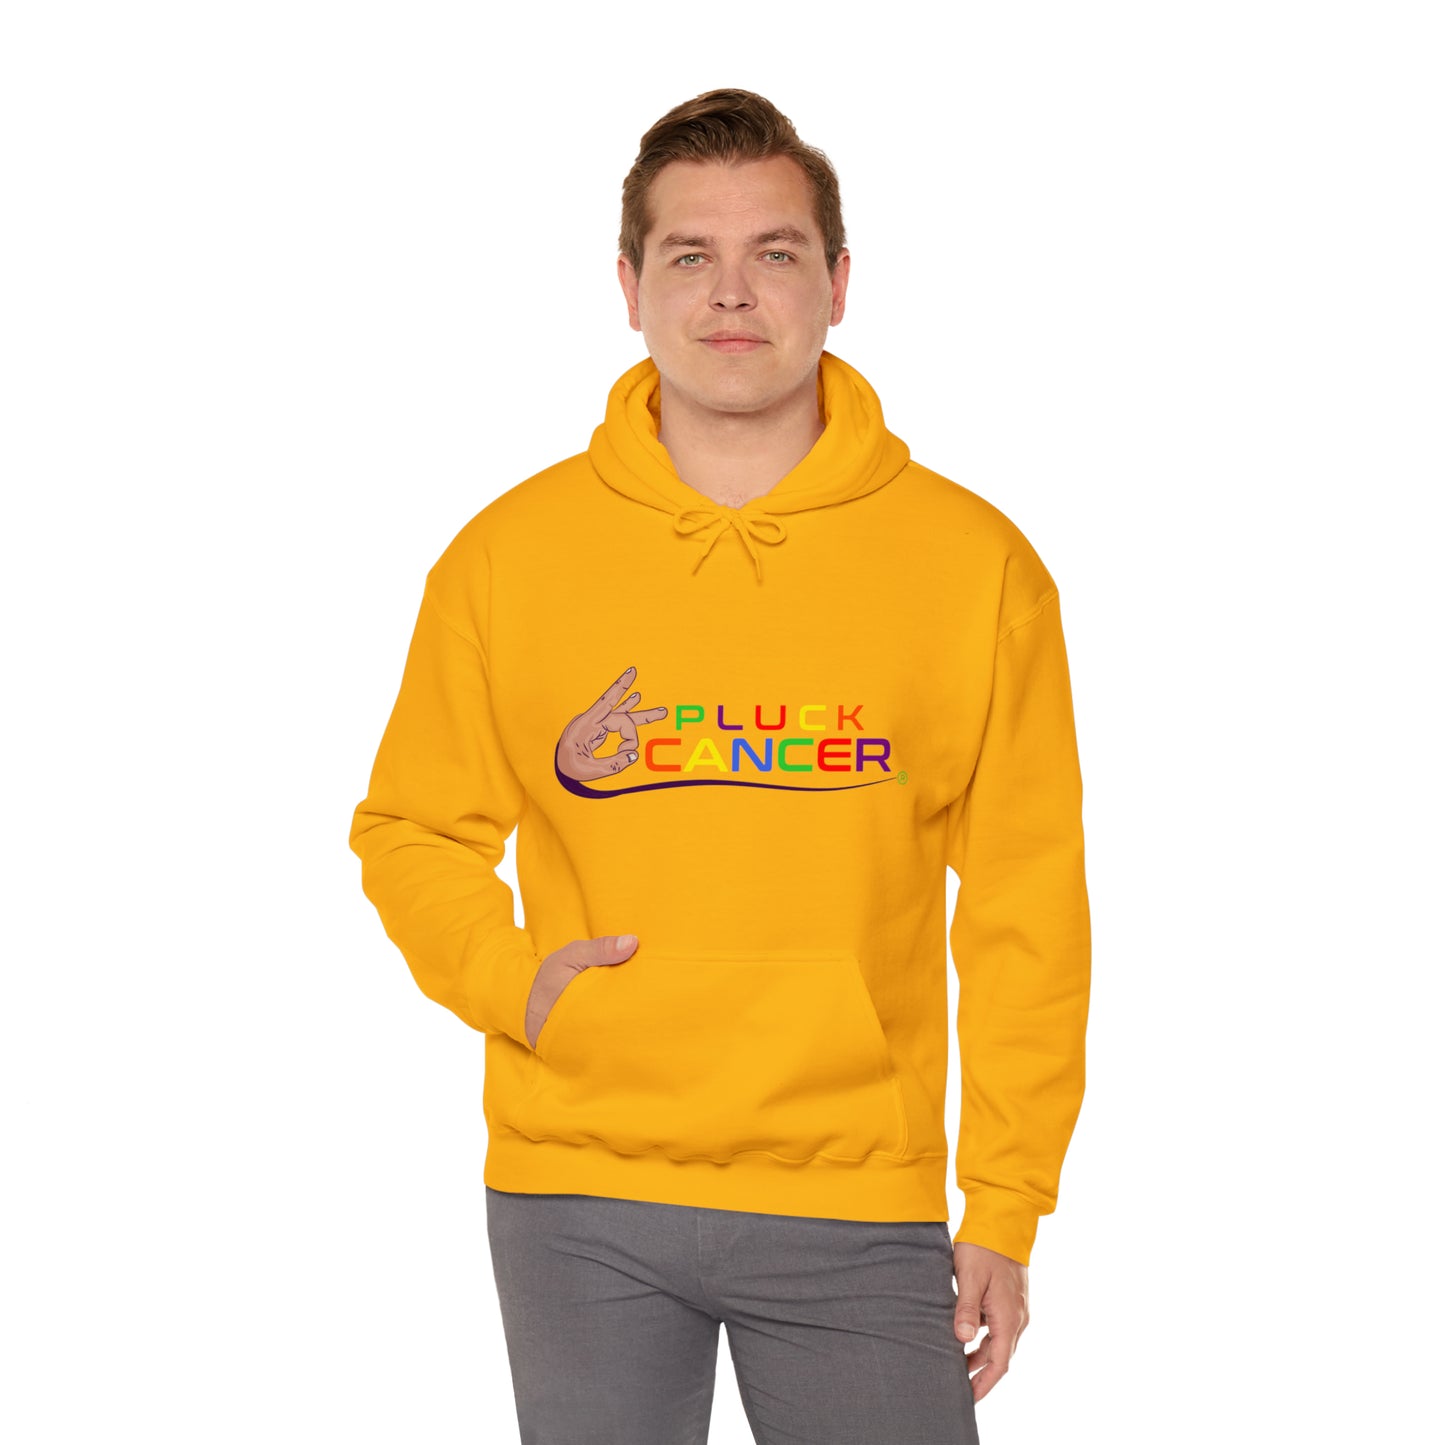 Pluck Cancer Men's Heavy Blend™ Hooded Sweatshirt - Gold